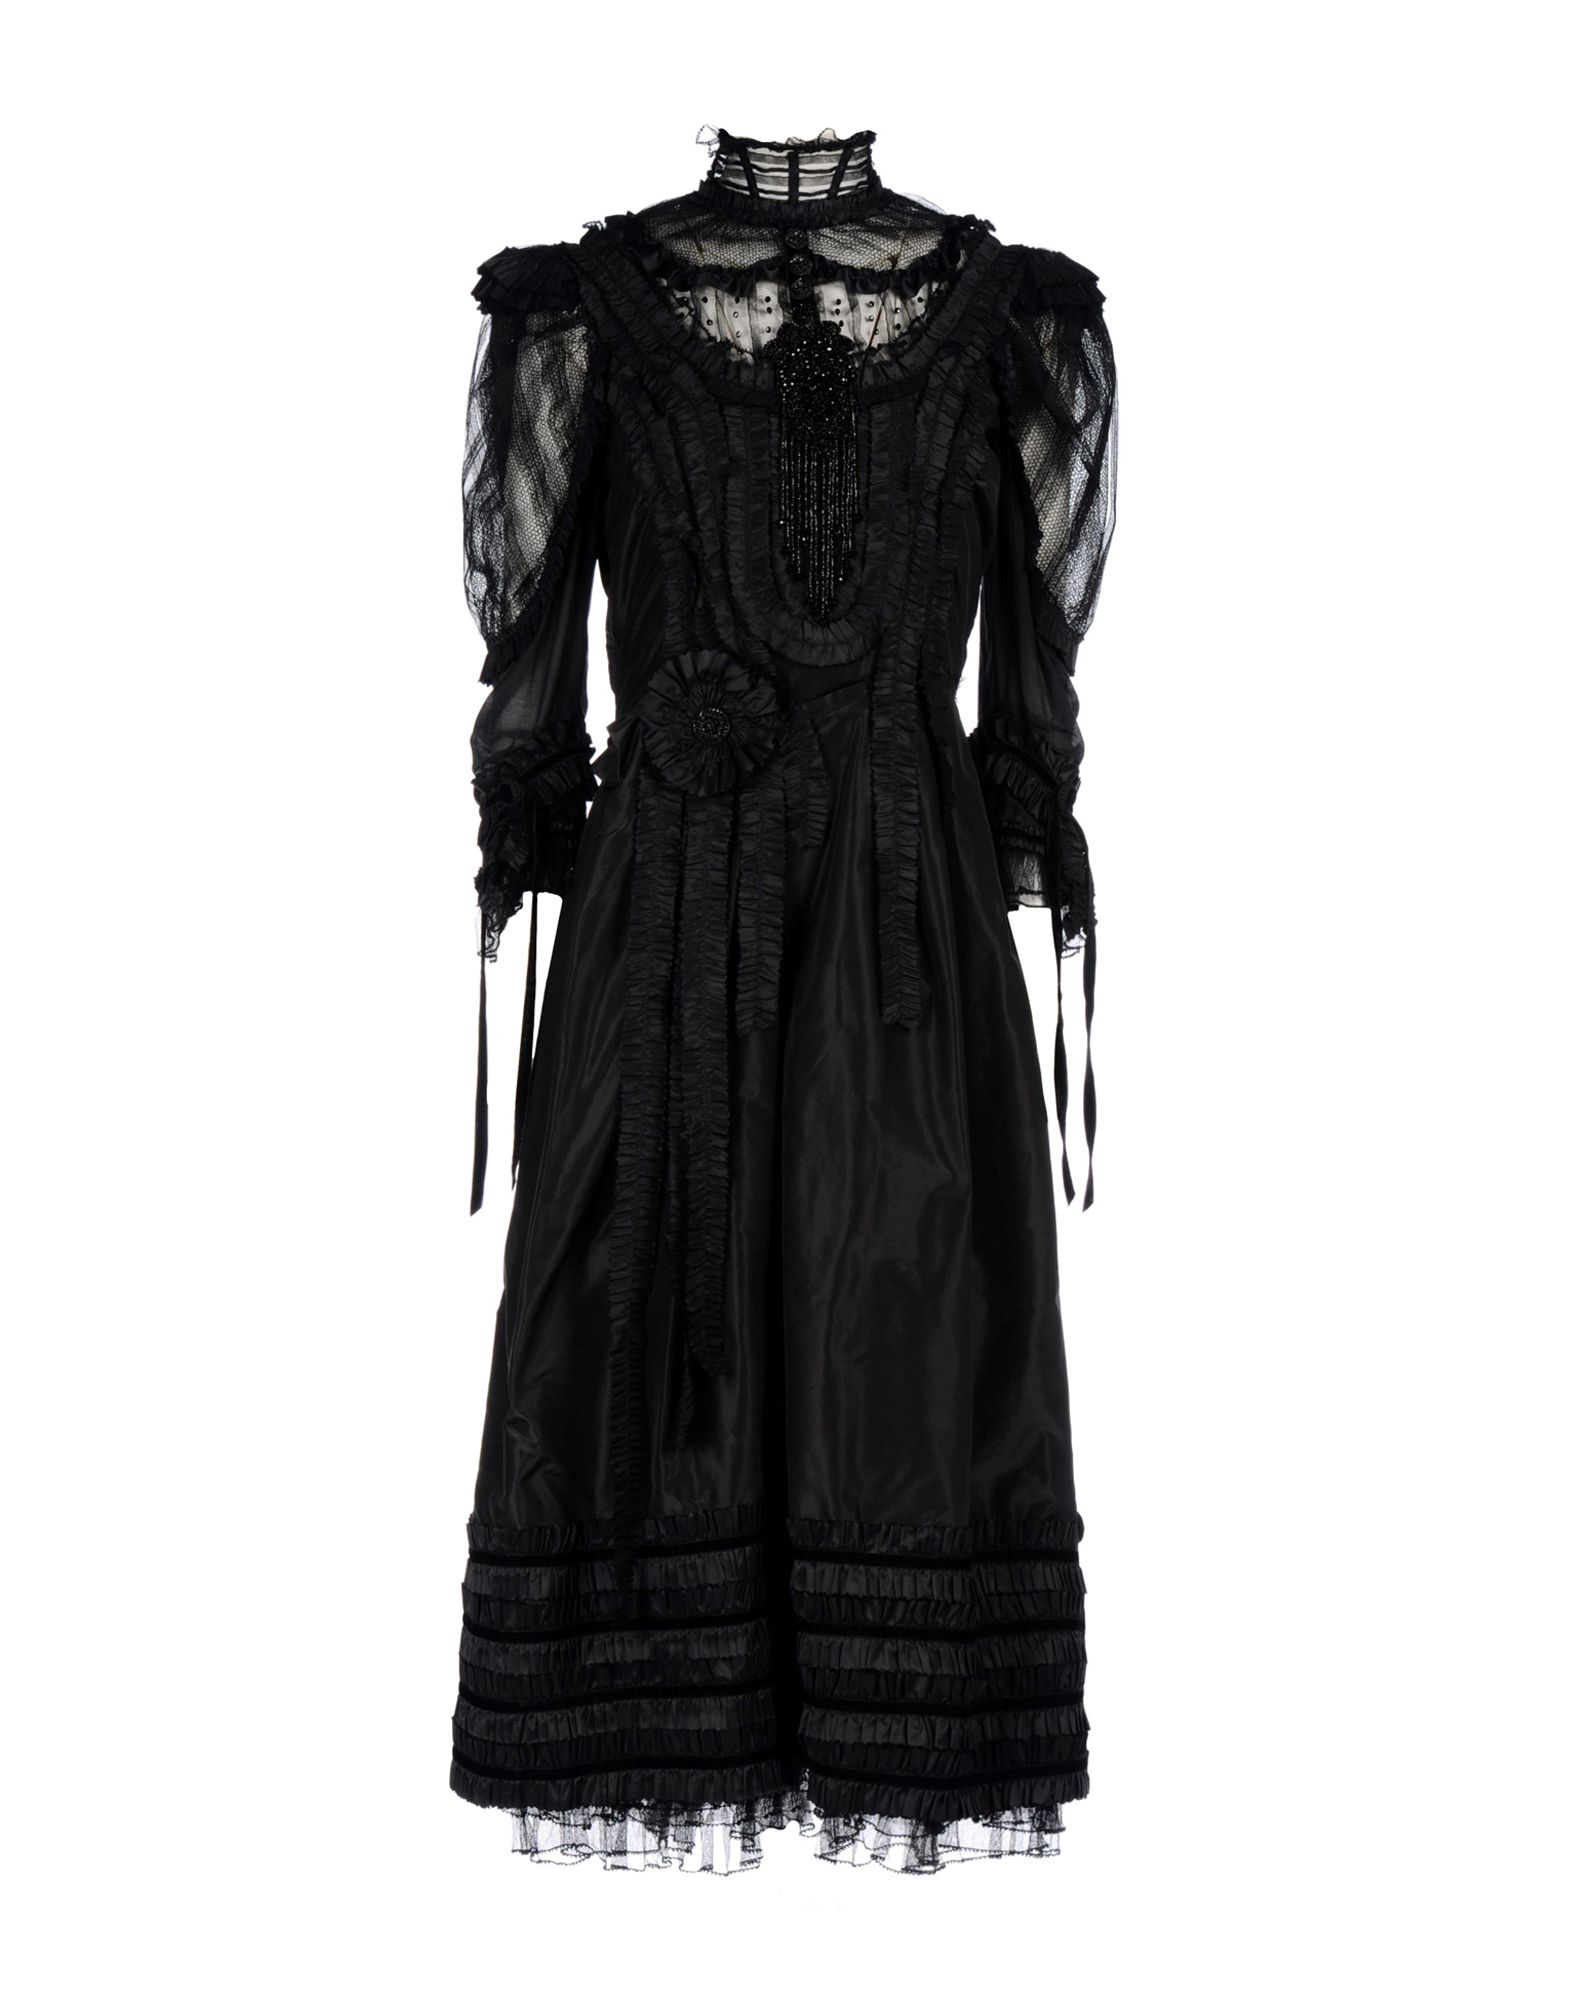 Lyst - Marc Jacobs Long Sleeve Dress in Black